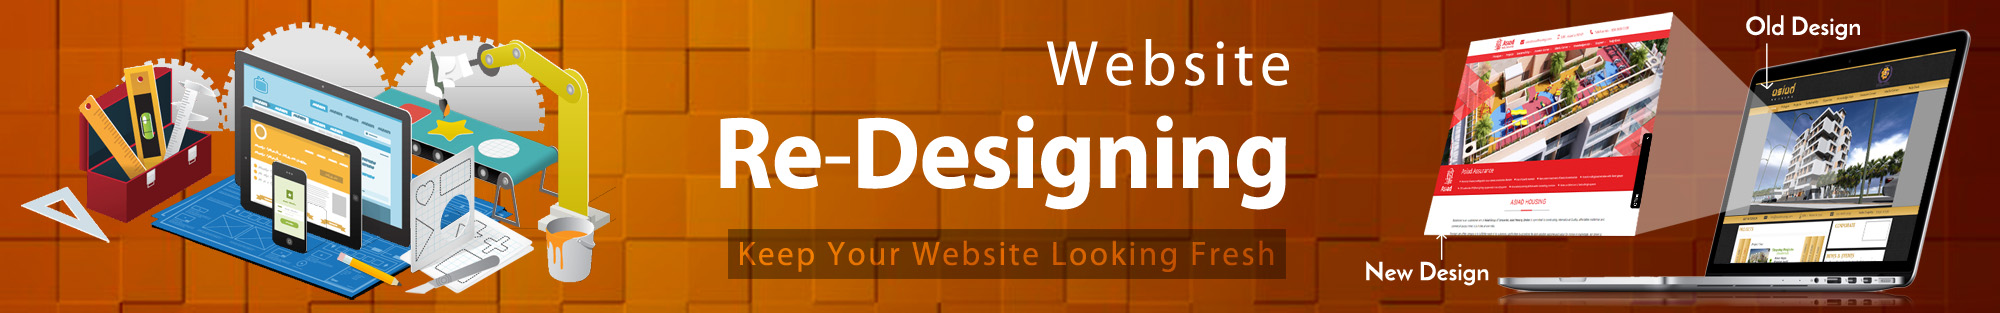 website revamp in Mumbai | Website redesign company in india